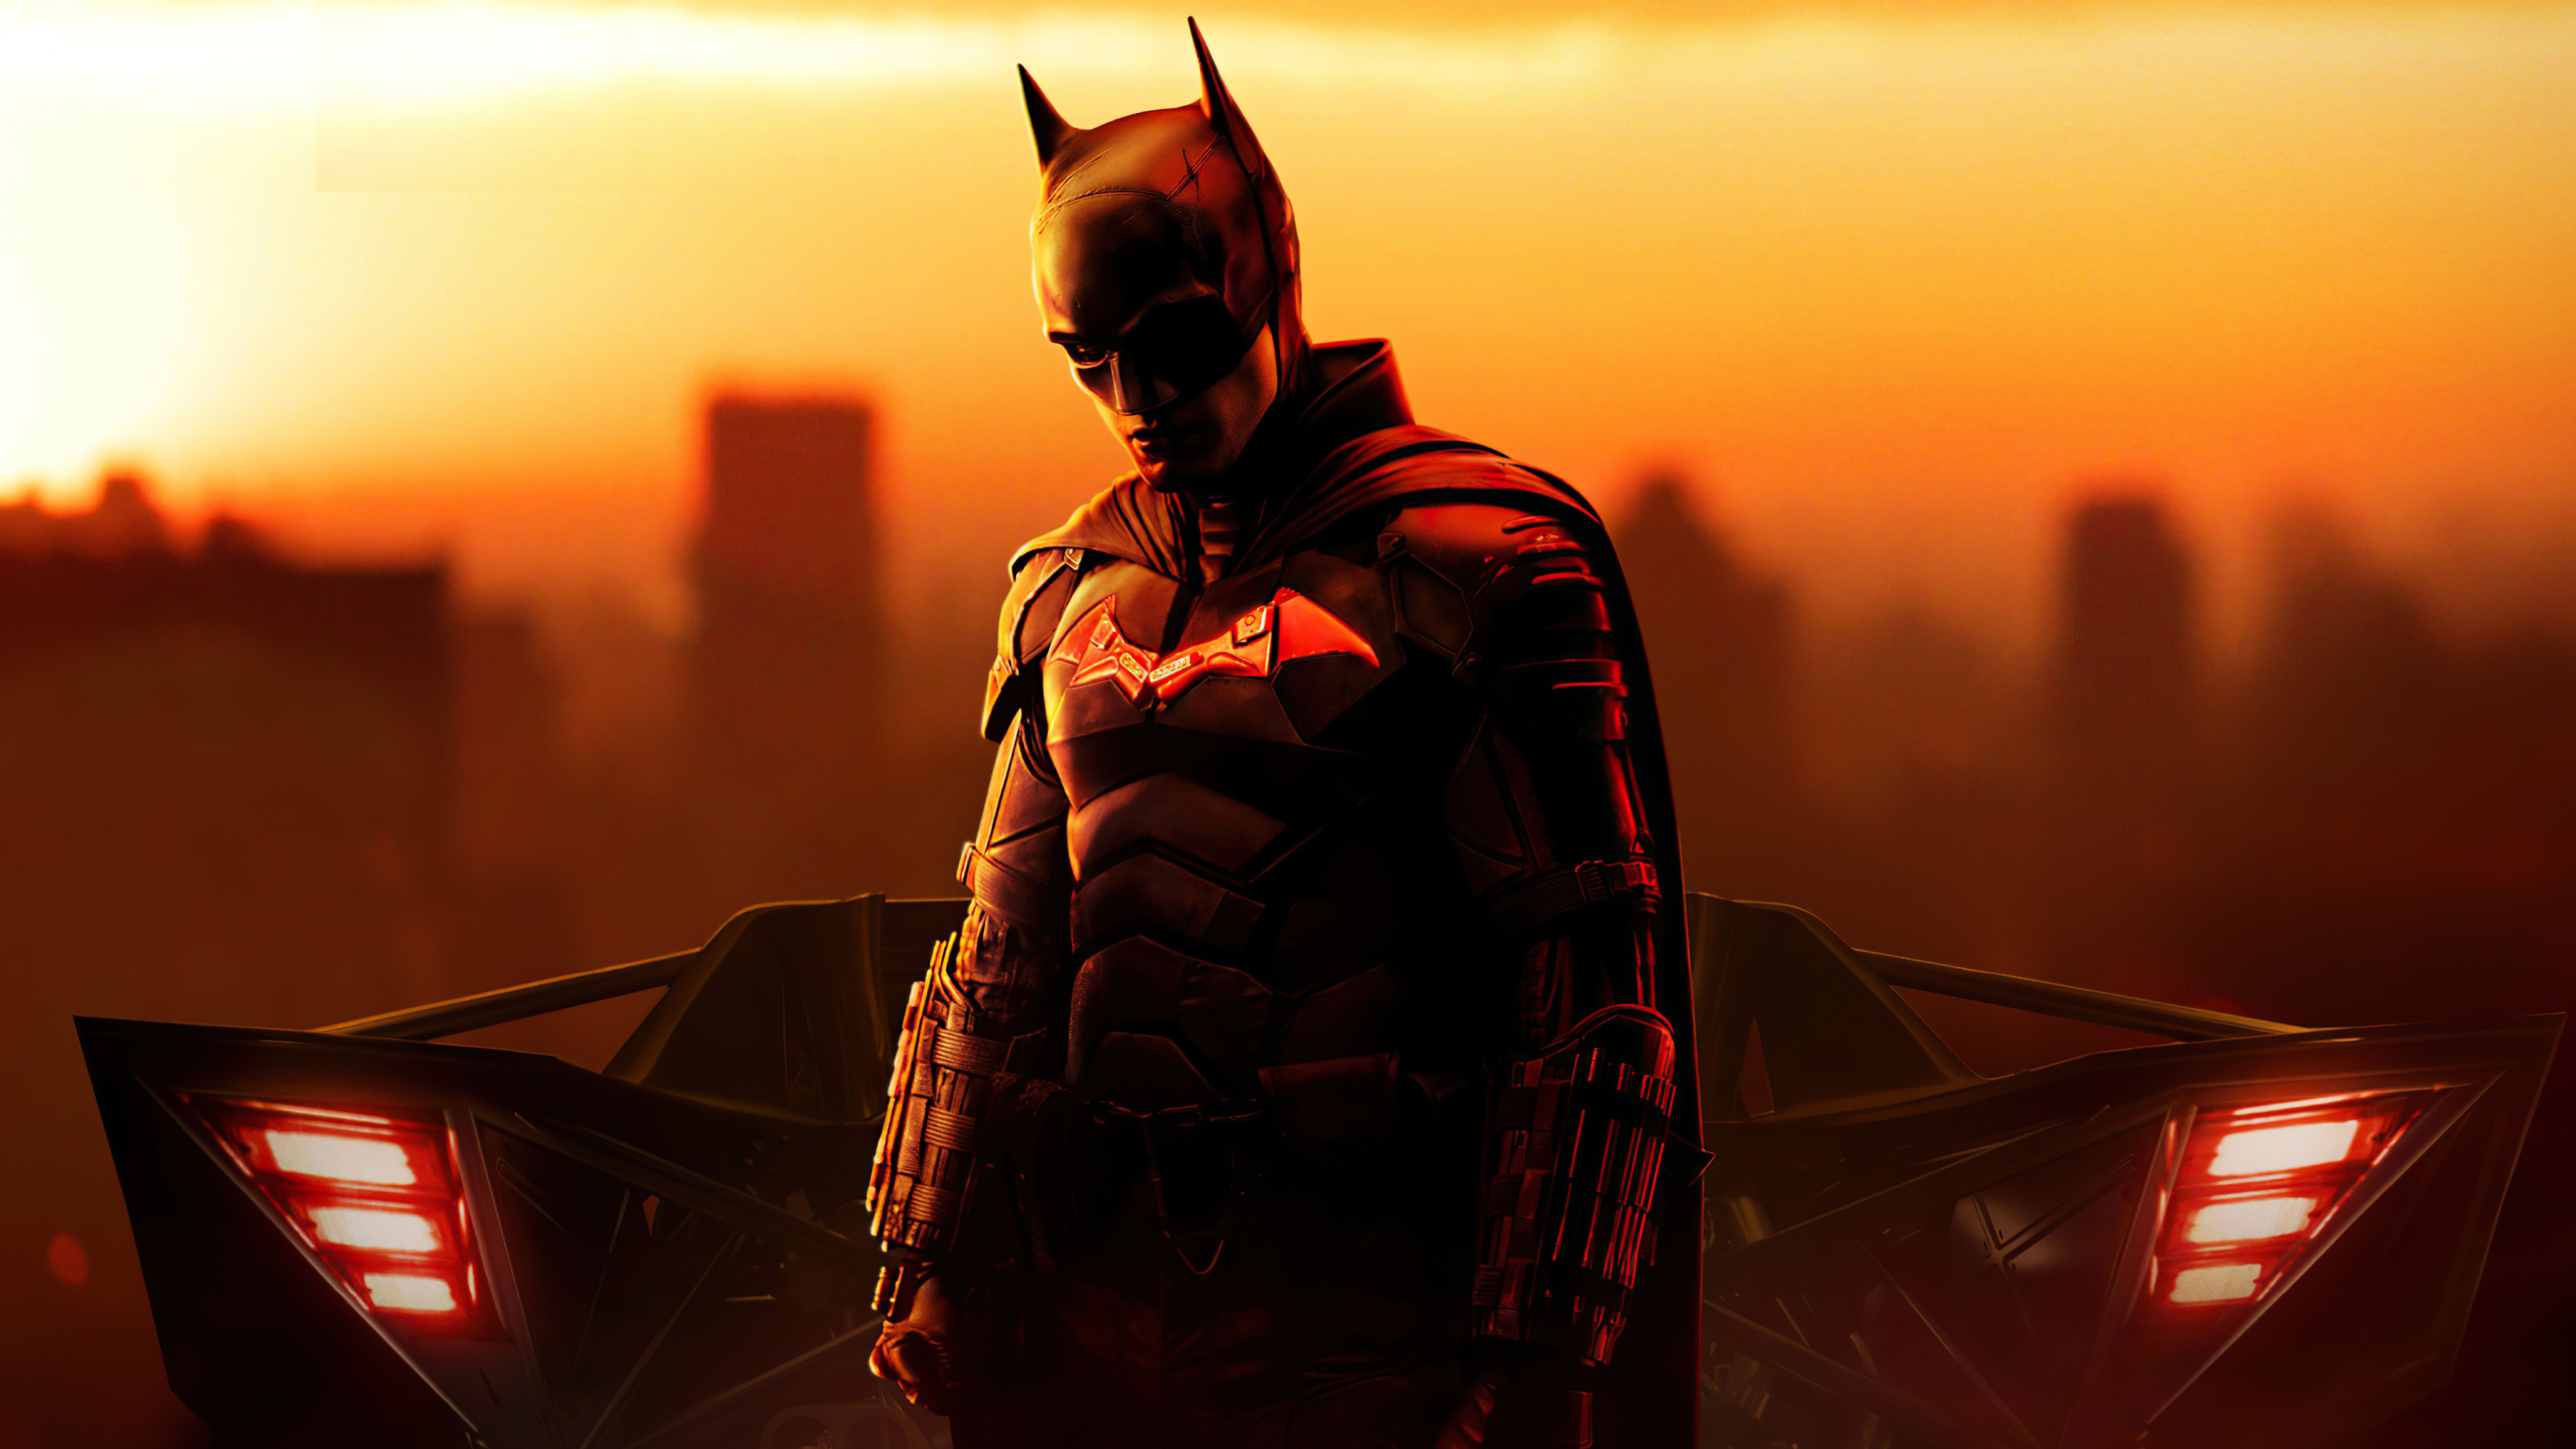 The Batman 4k Wallpapers - Top Ultra 4k The Batman Backgrounds